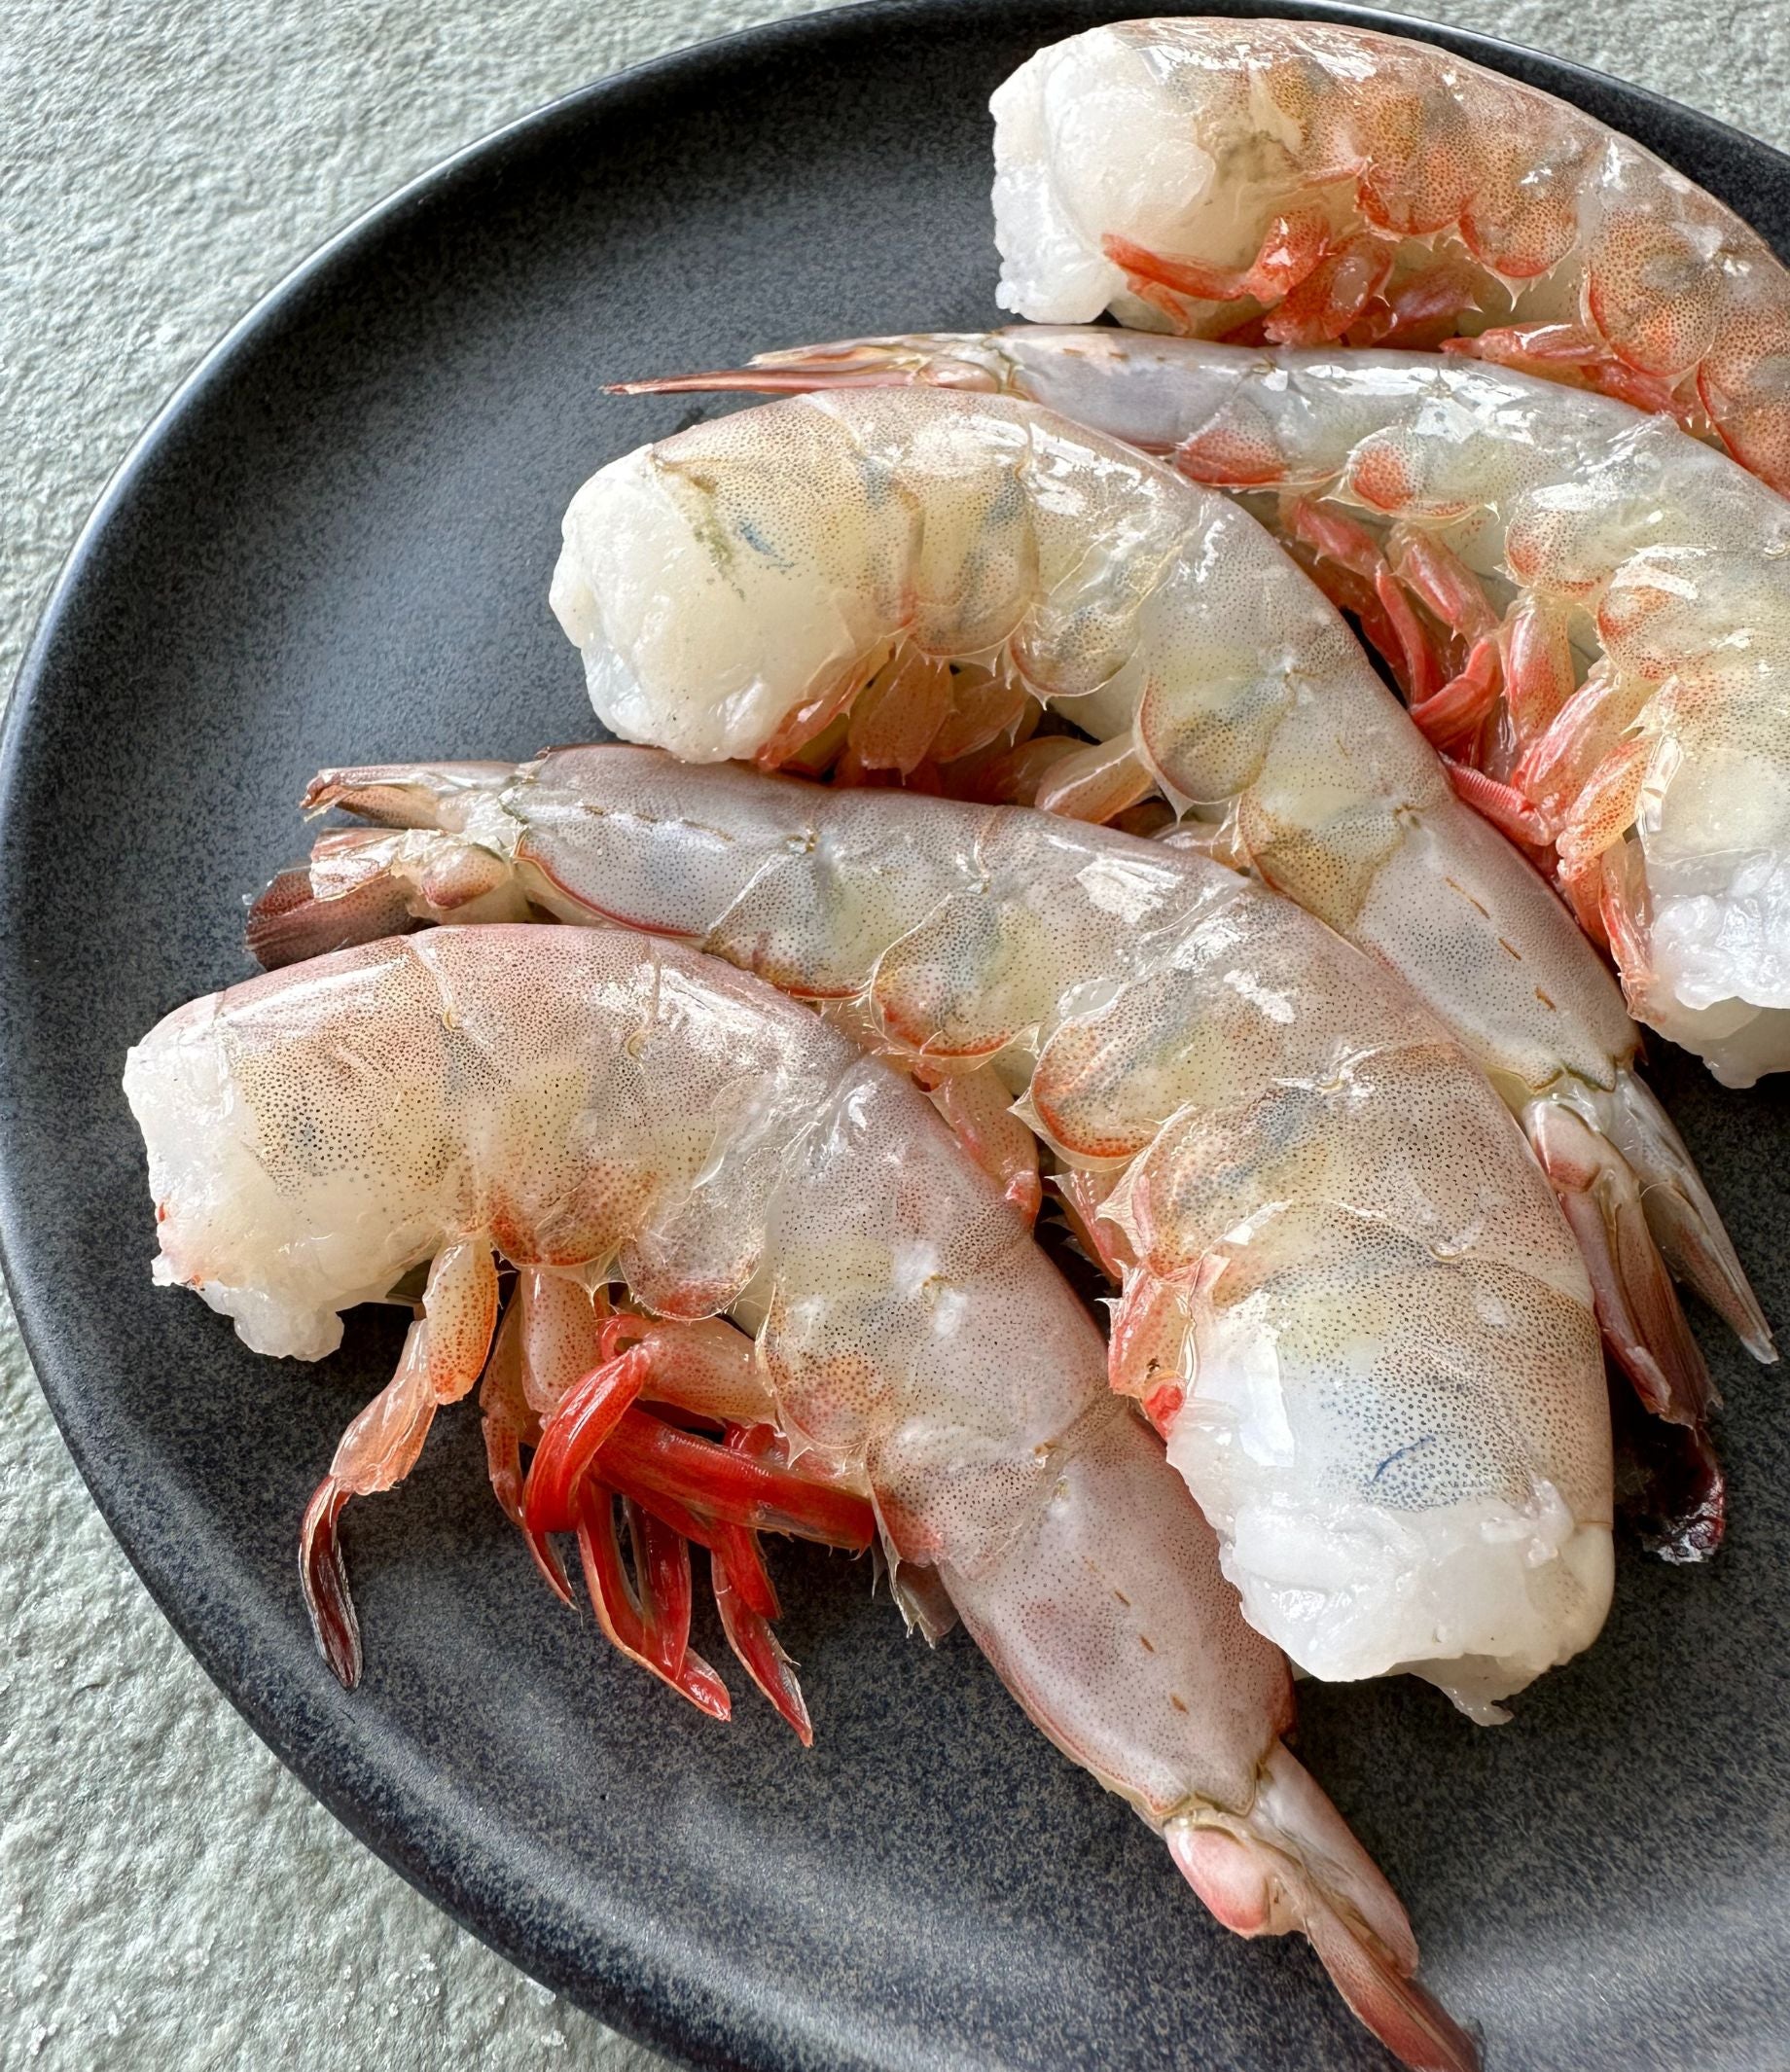 uncooked shrimp